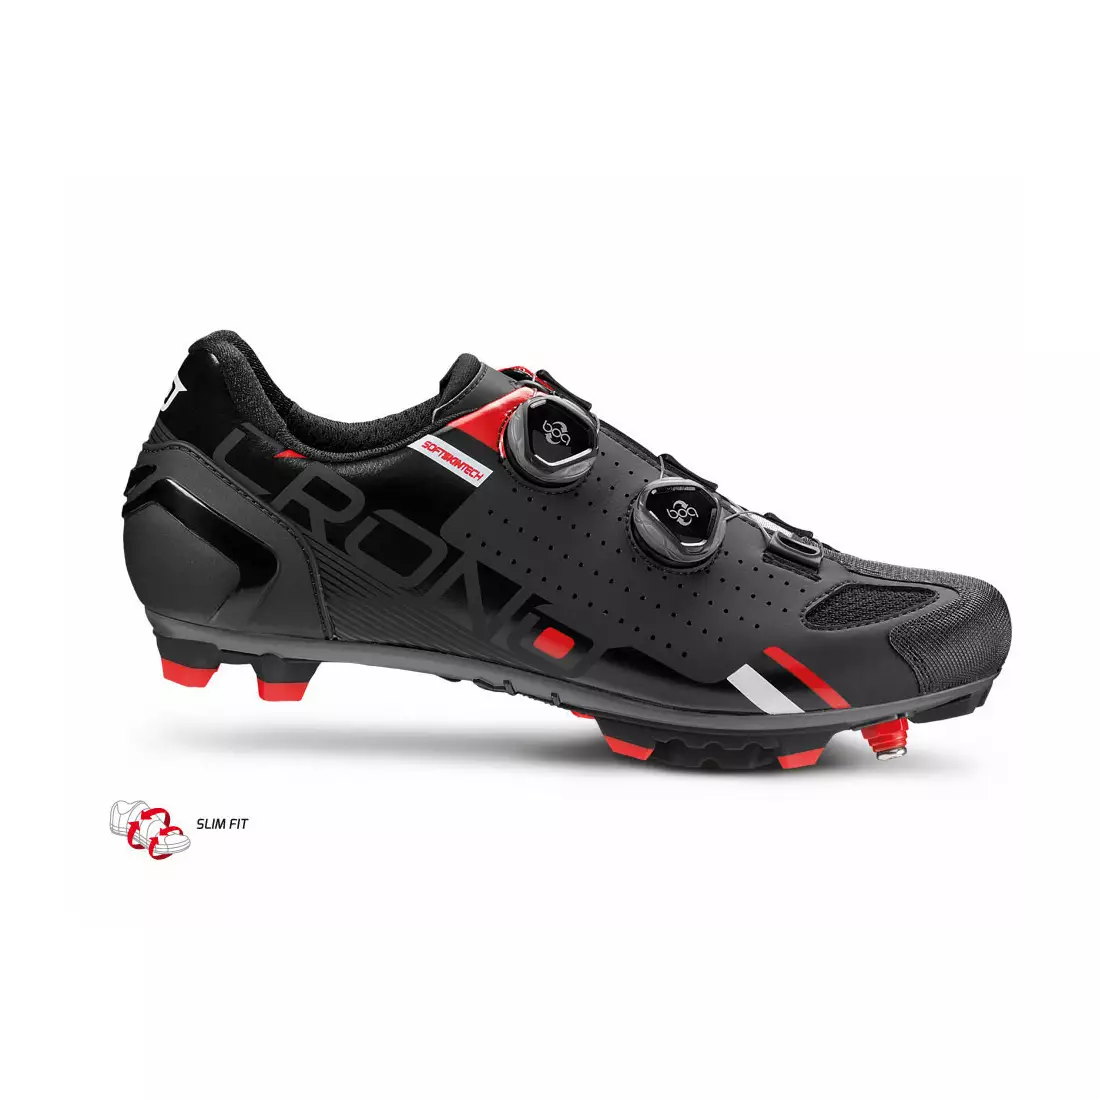 Pantofi de ciclism MTB pentru bărbați CRONO CX2 Nylon, negri